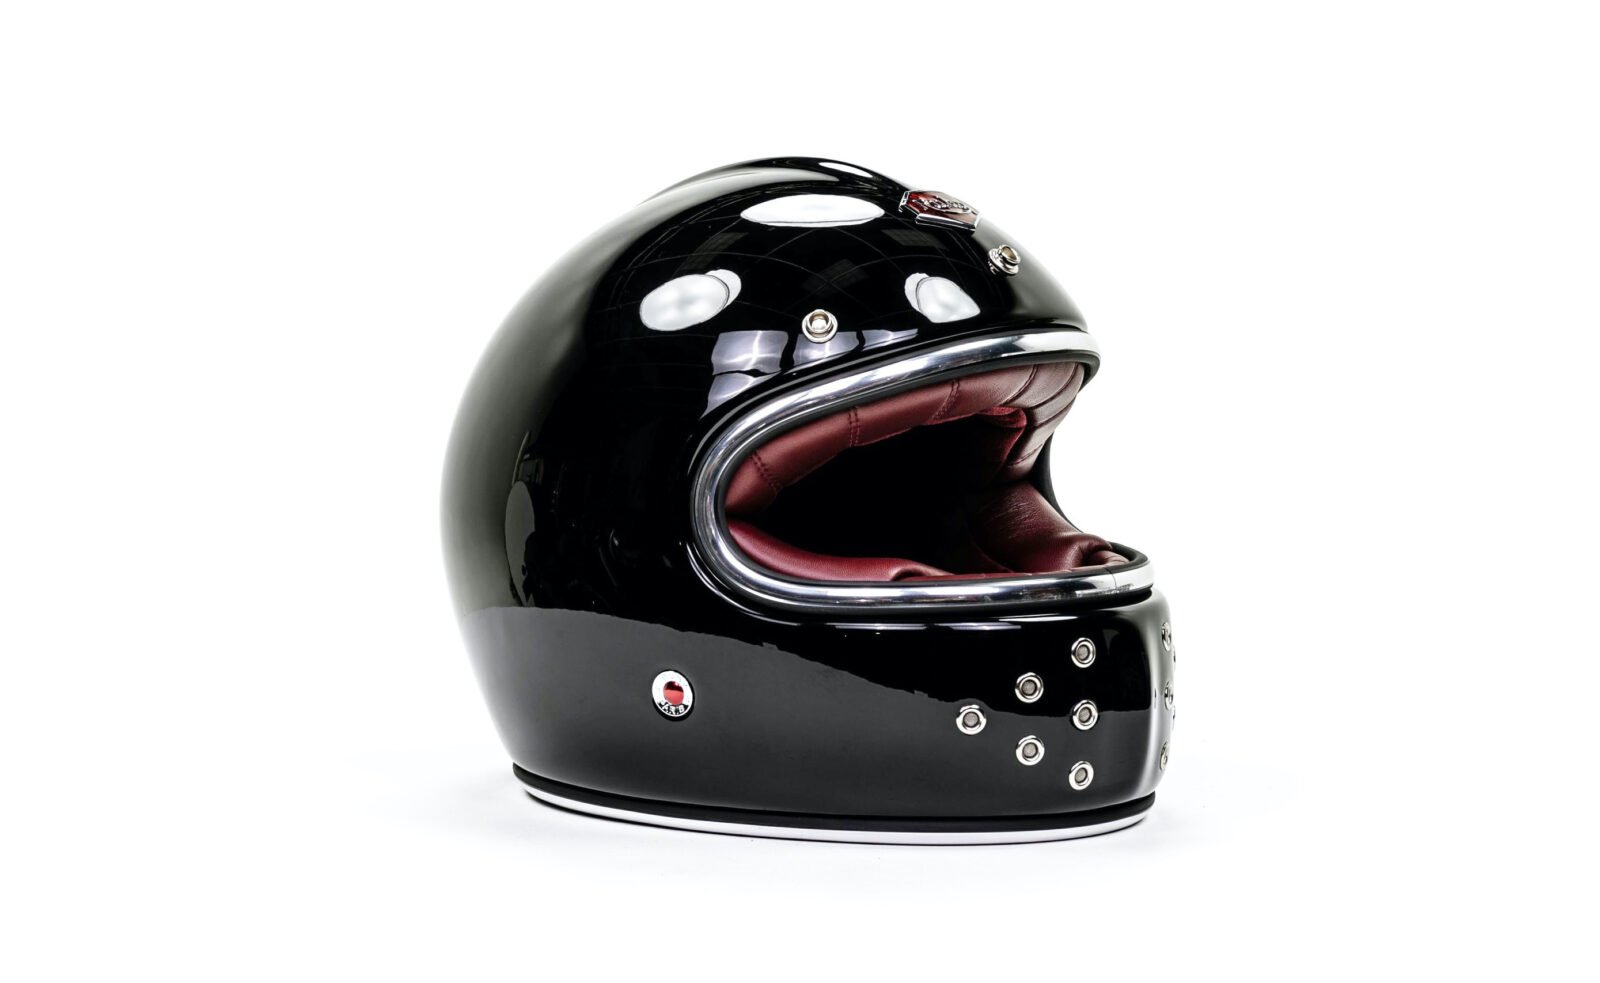 Ruby Castel St Germain Helmet - The World's Most Beautiful Motorcycle